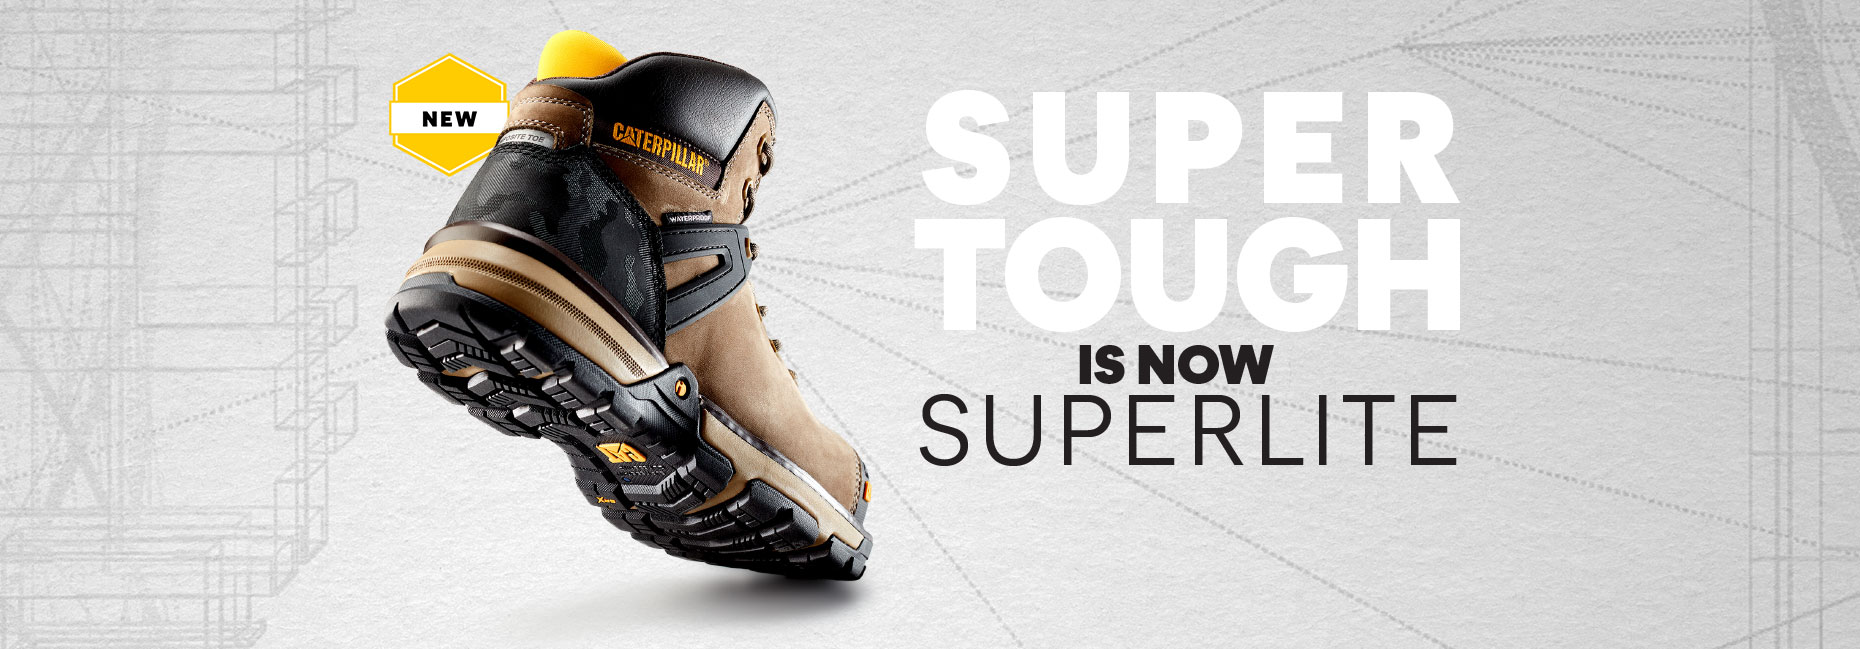 Super Tough is now Superlite.